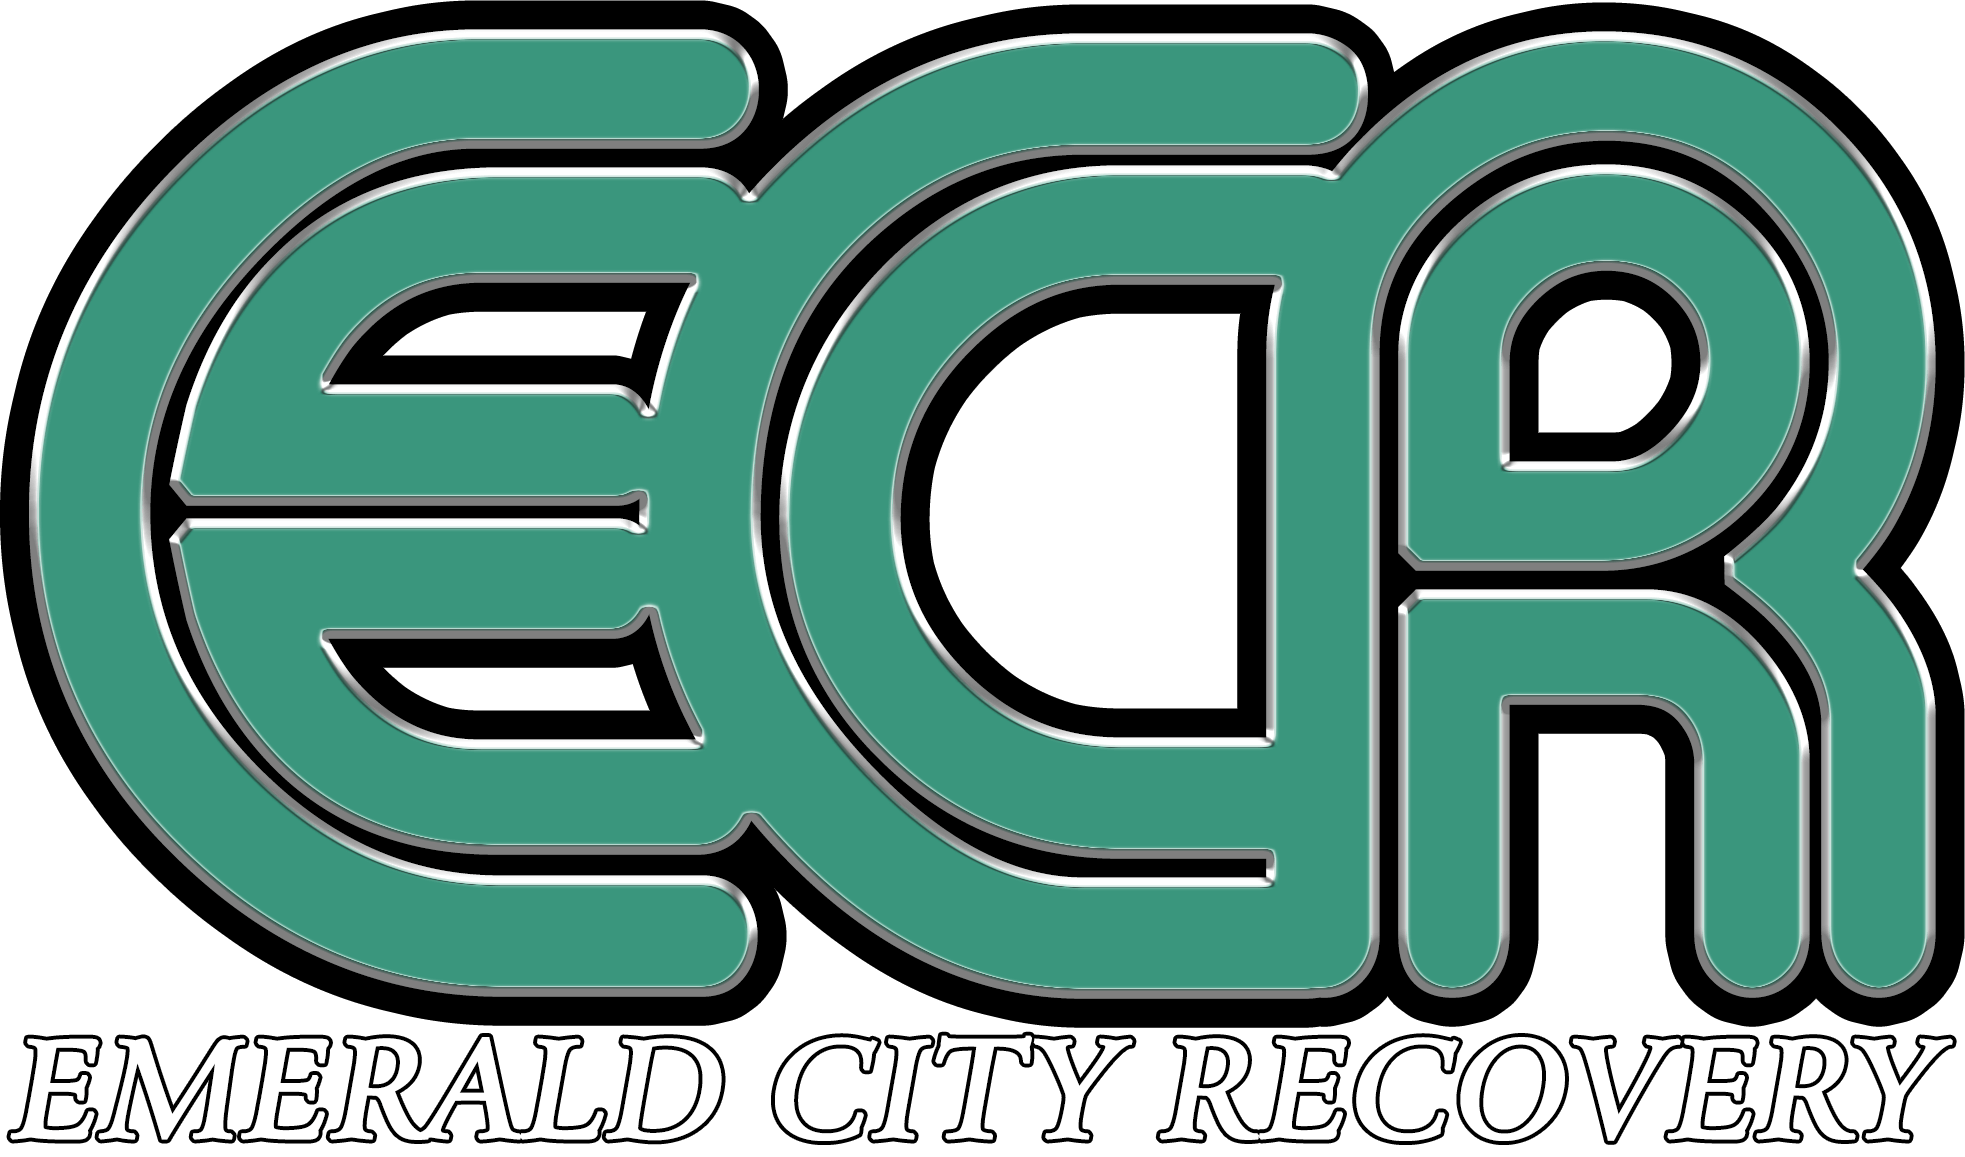 Emerald City Recovery provides professional involuntary repo services in Washington state!